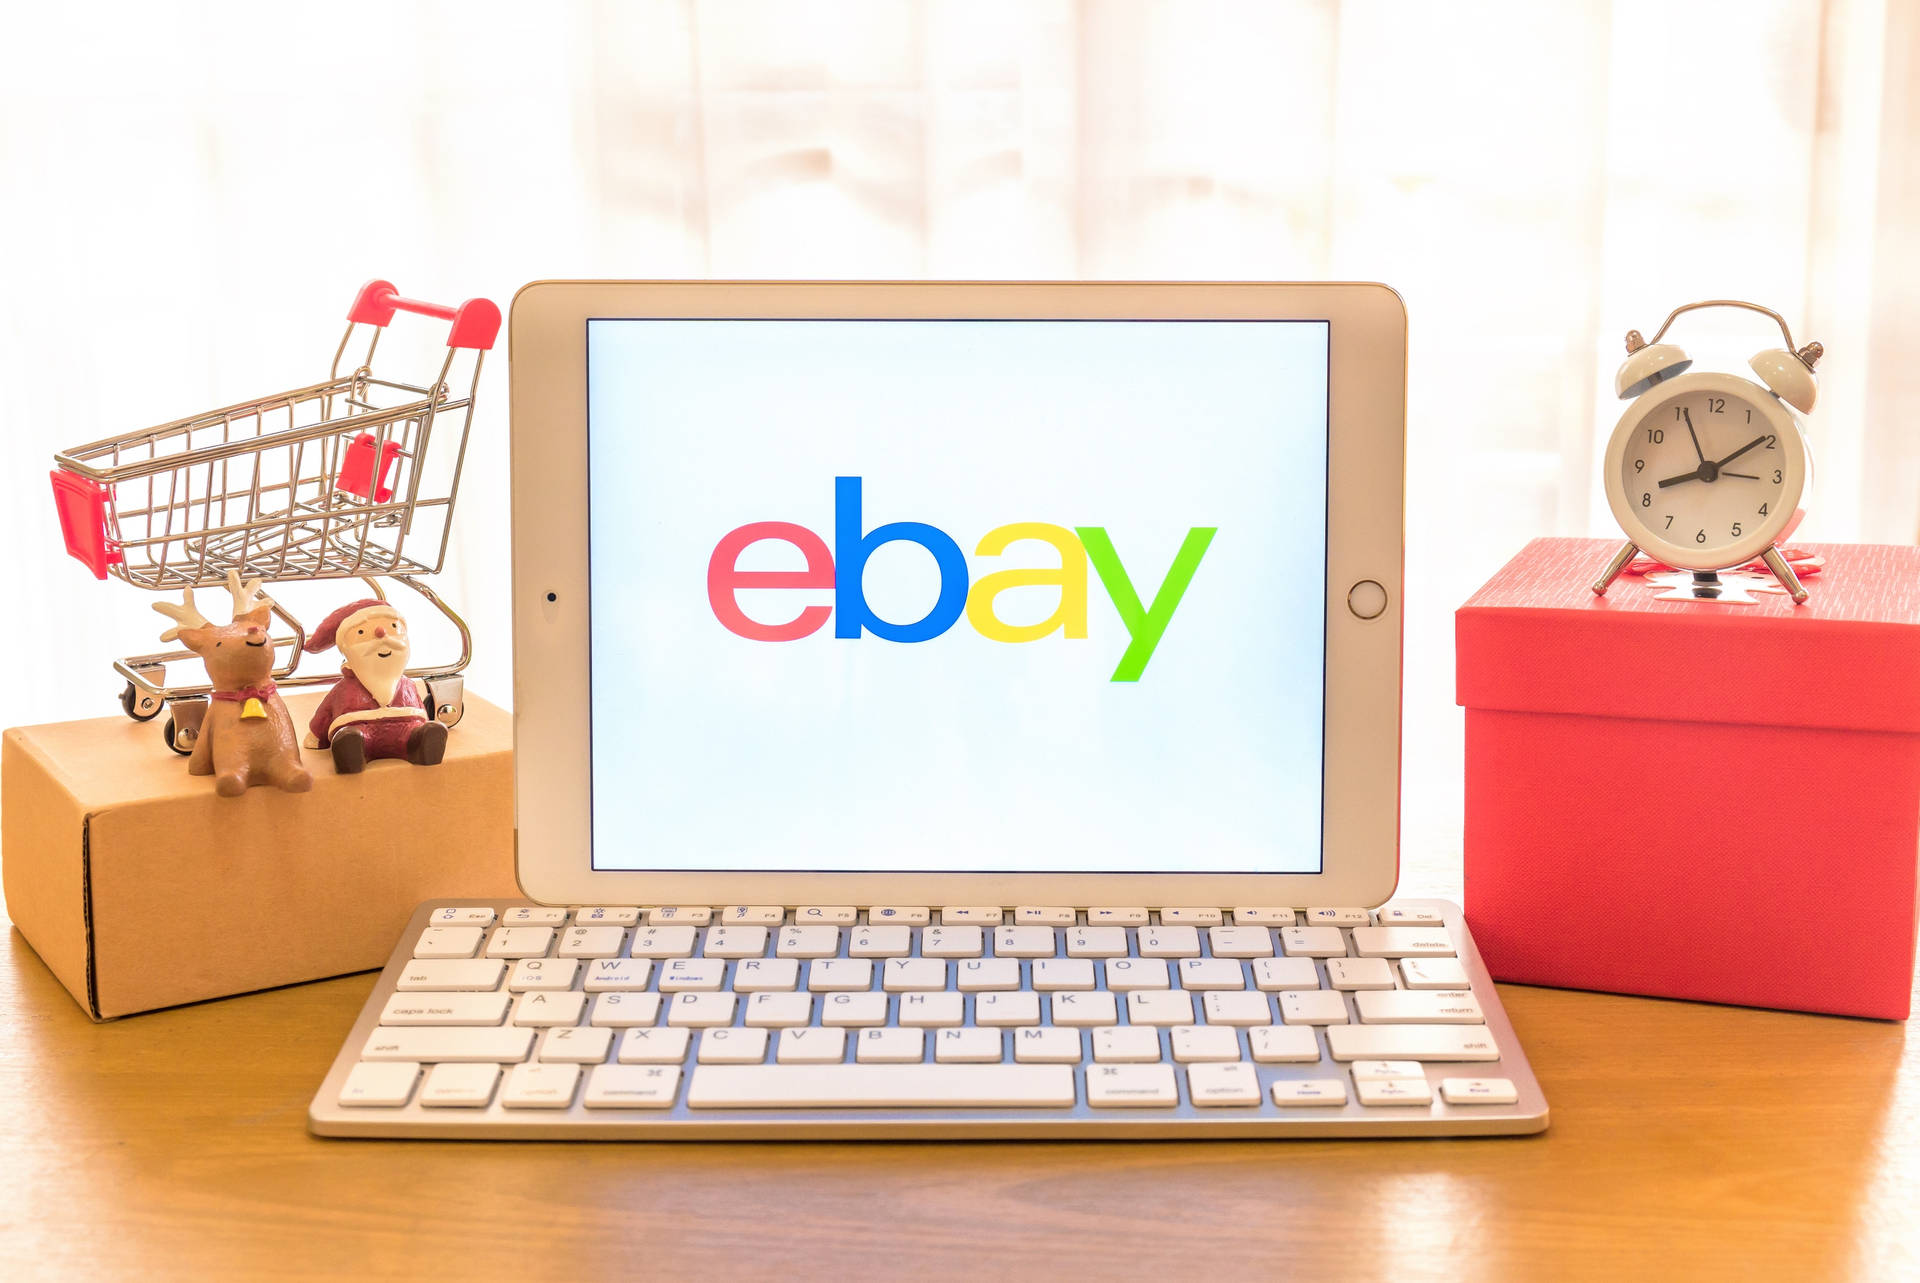 Ebay On Tablet Background